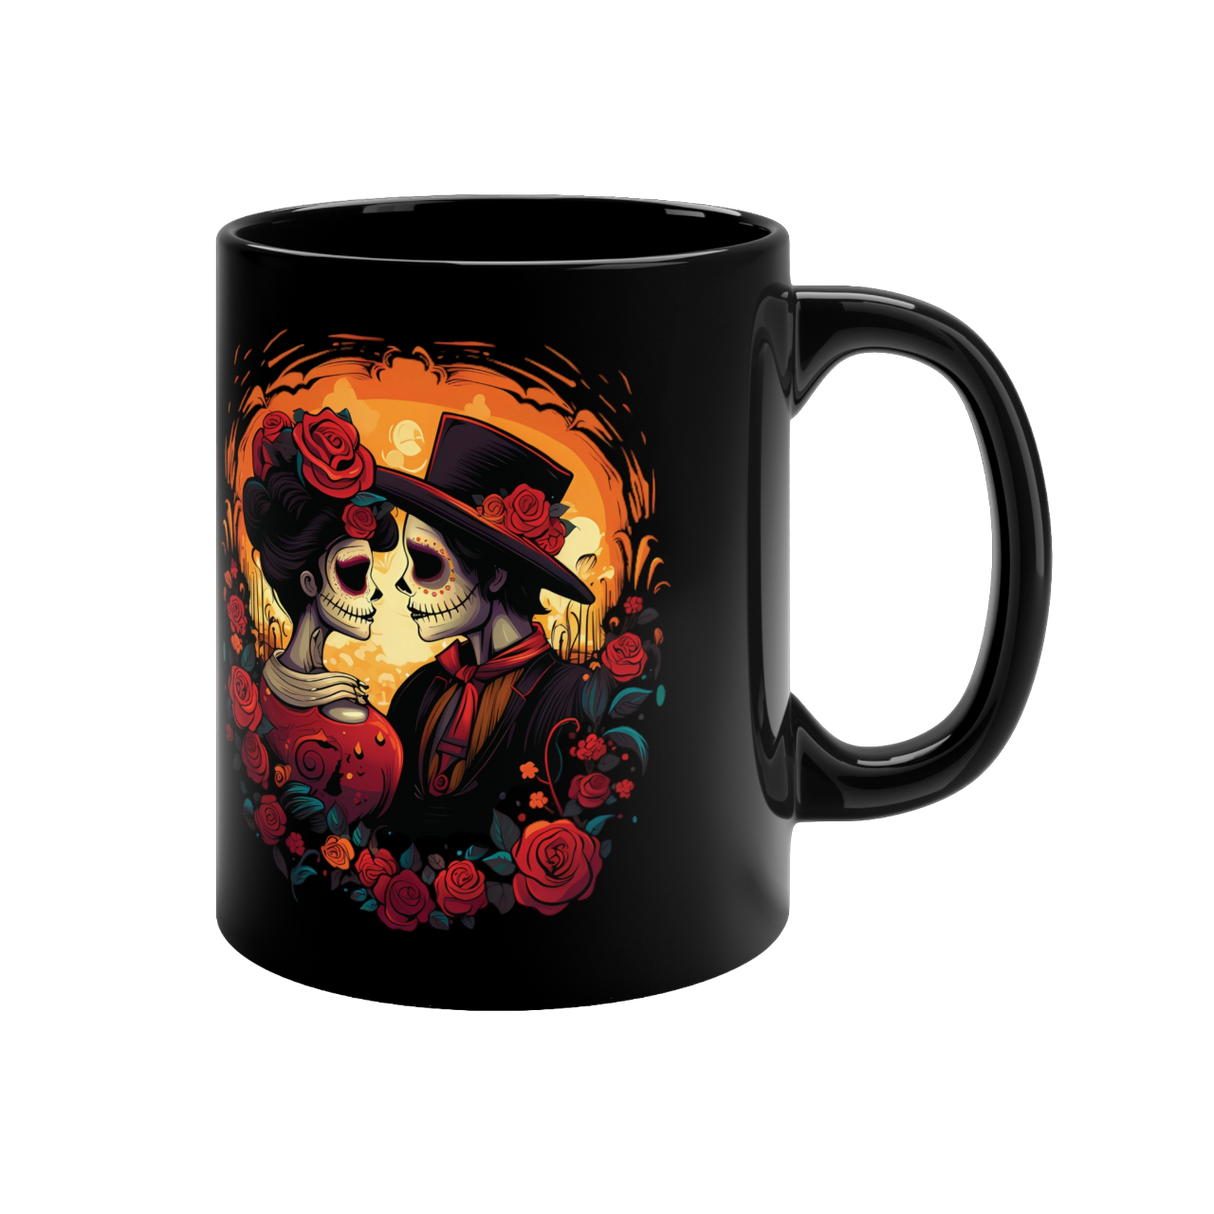 Coffee mug black - Dia de los Muertos motif - Kiss of Eternity - about 300ml